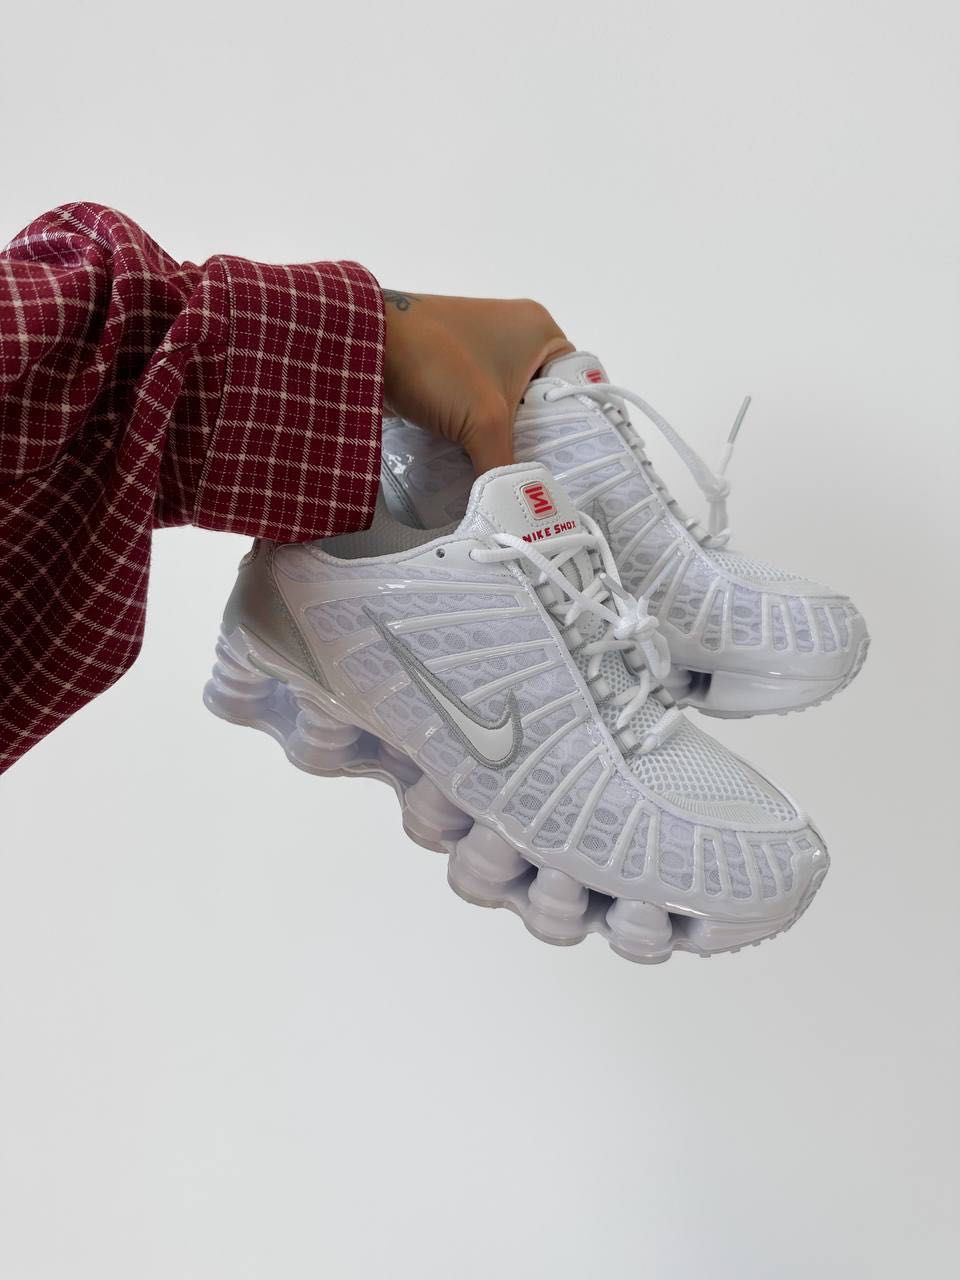 Мужские кроссовки Nike SHOX TL White . Размеры 40-45